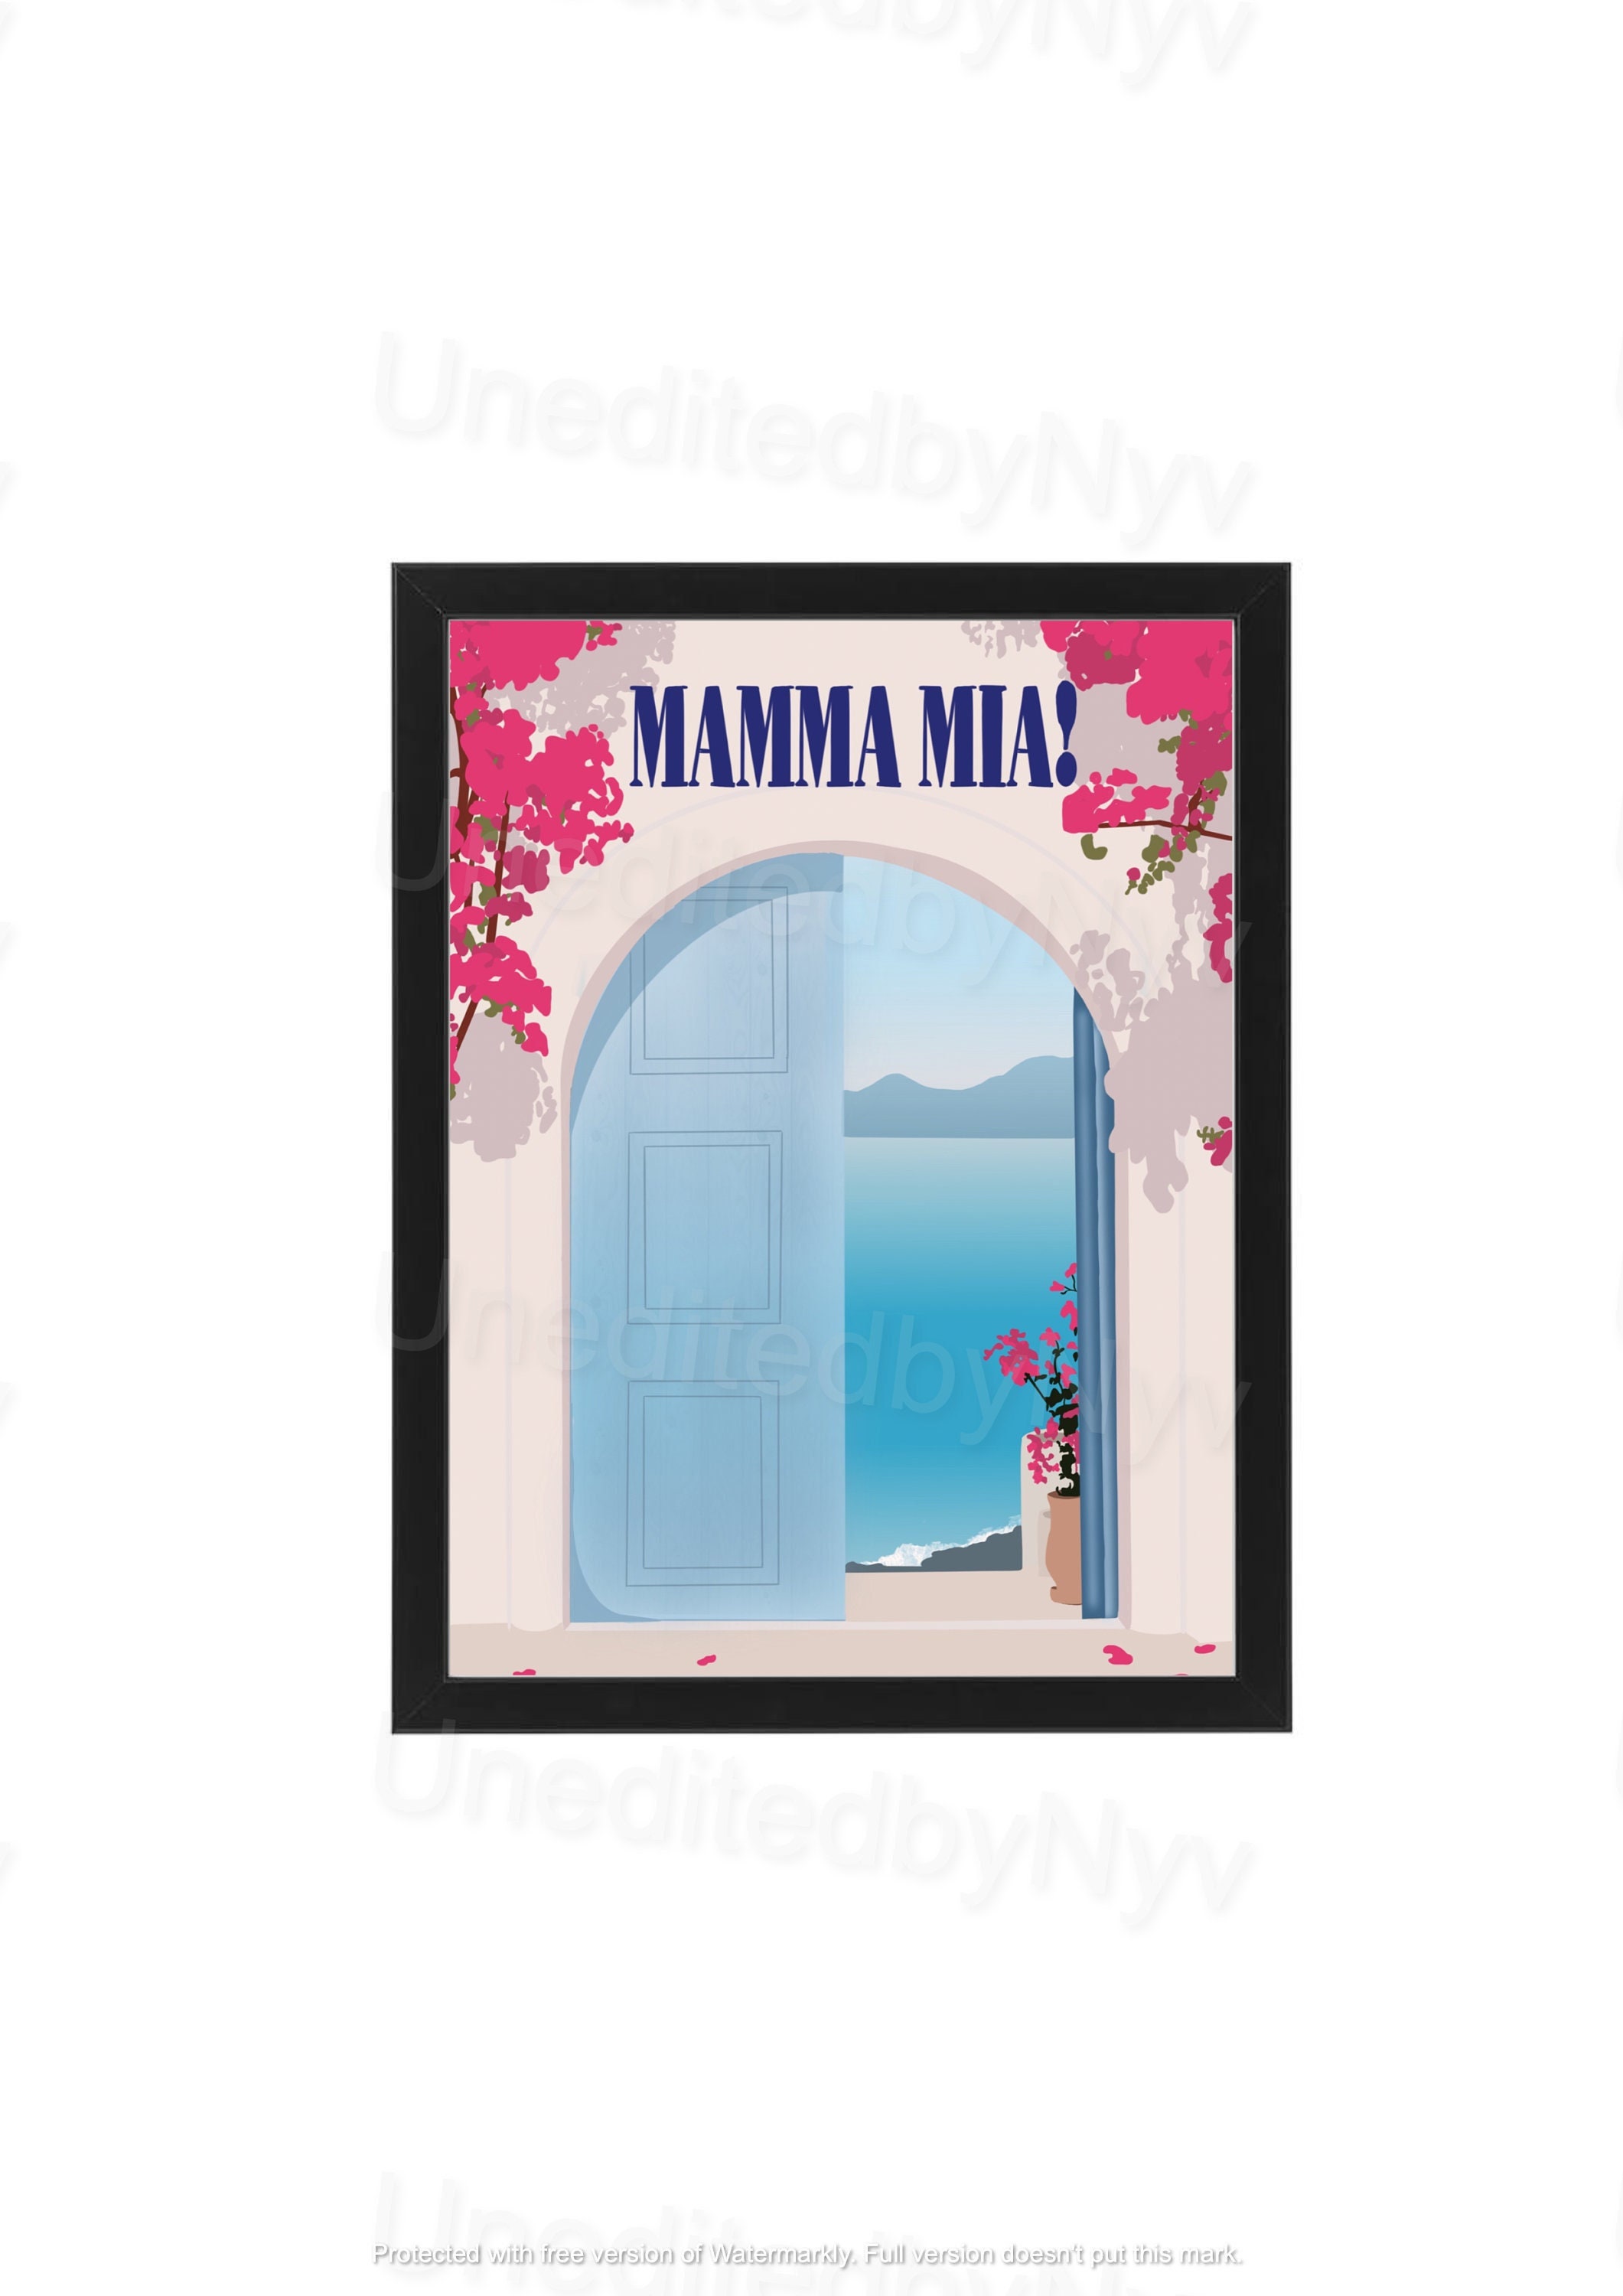 Mamma Mia is a Feminist Exploration of Choice